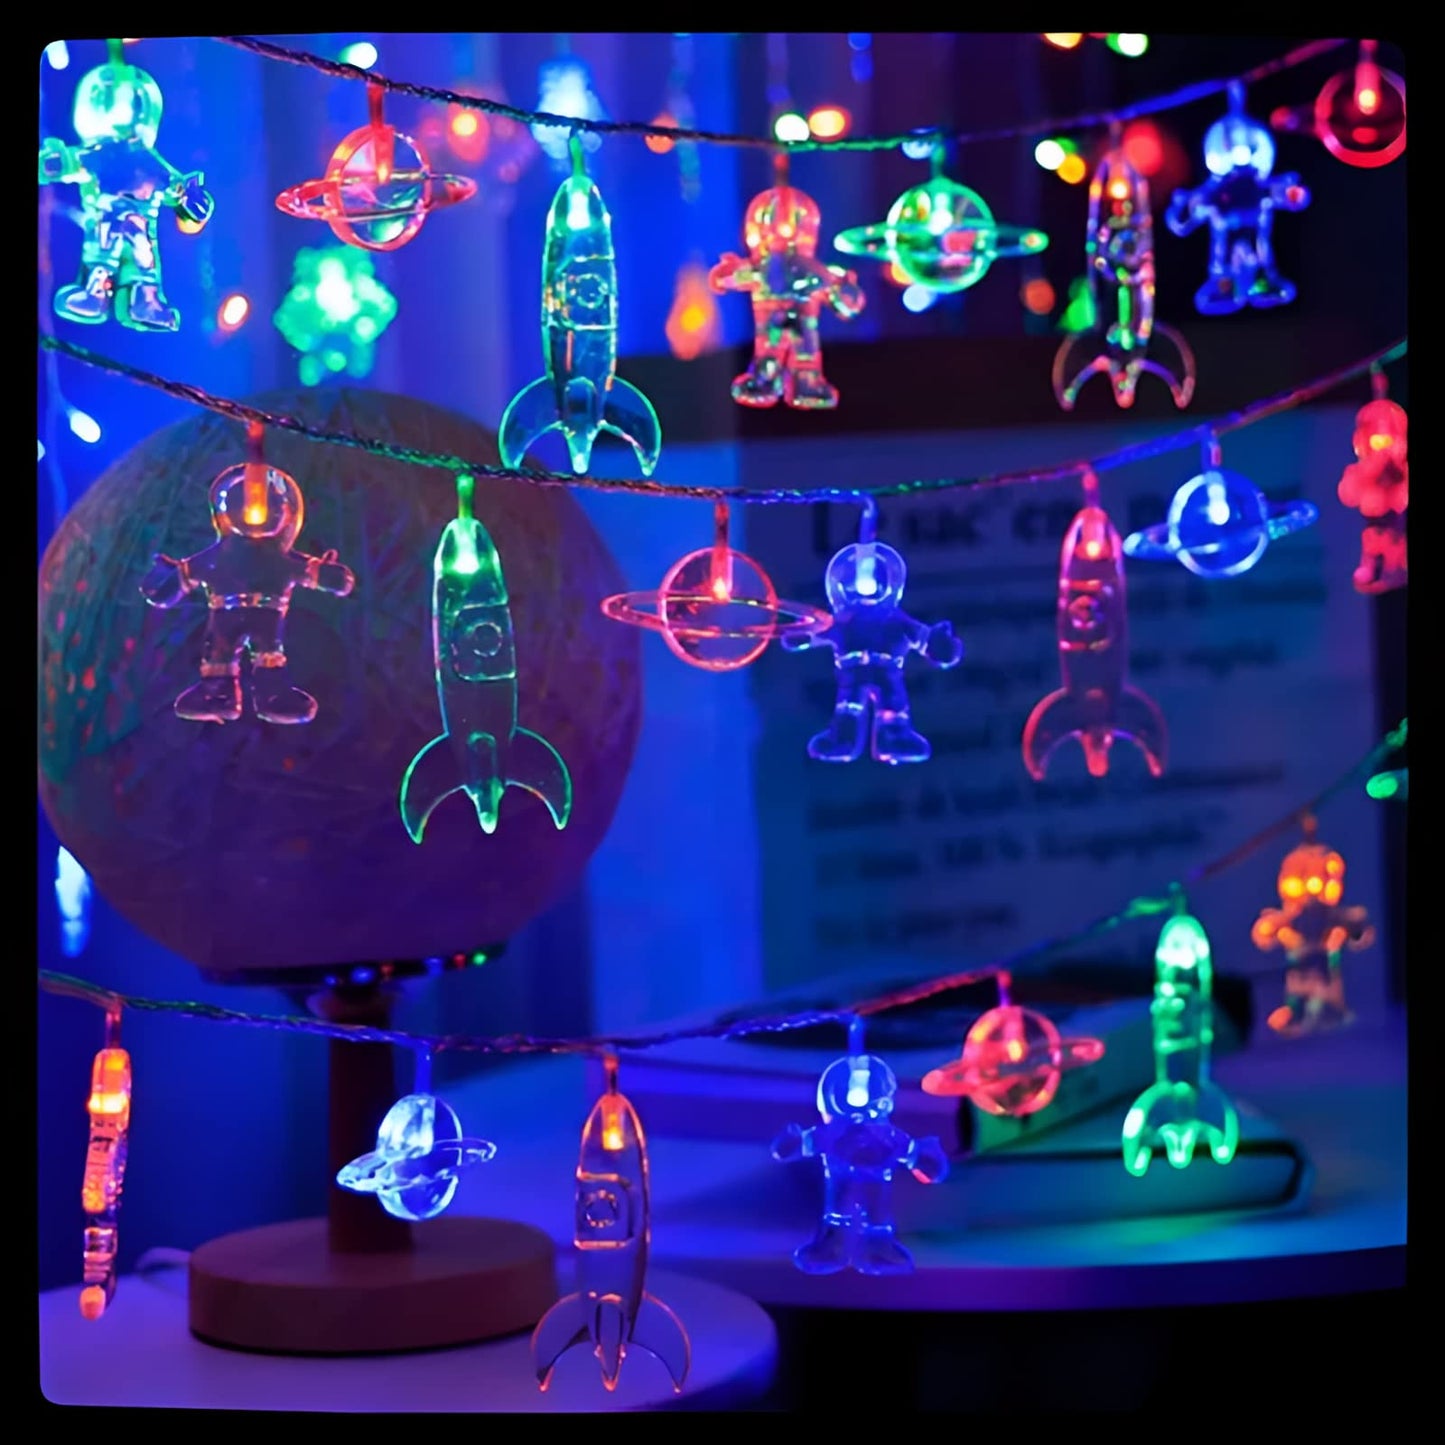 Beauenty 3m 20 Led Children's Room Astronaut Light String, Astronaut Spaceship Rocket Pendant Light String, Children's Room Decoration, Party Birthday Decoration Light（(Multicolor)）